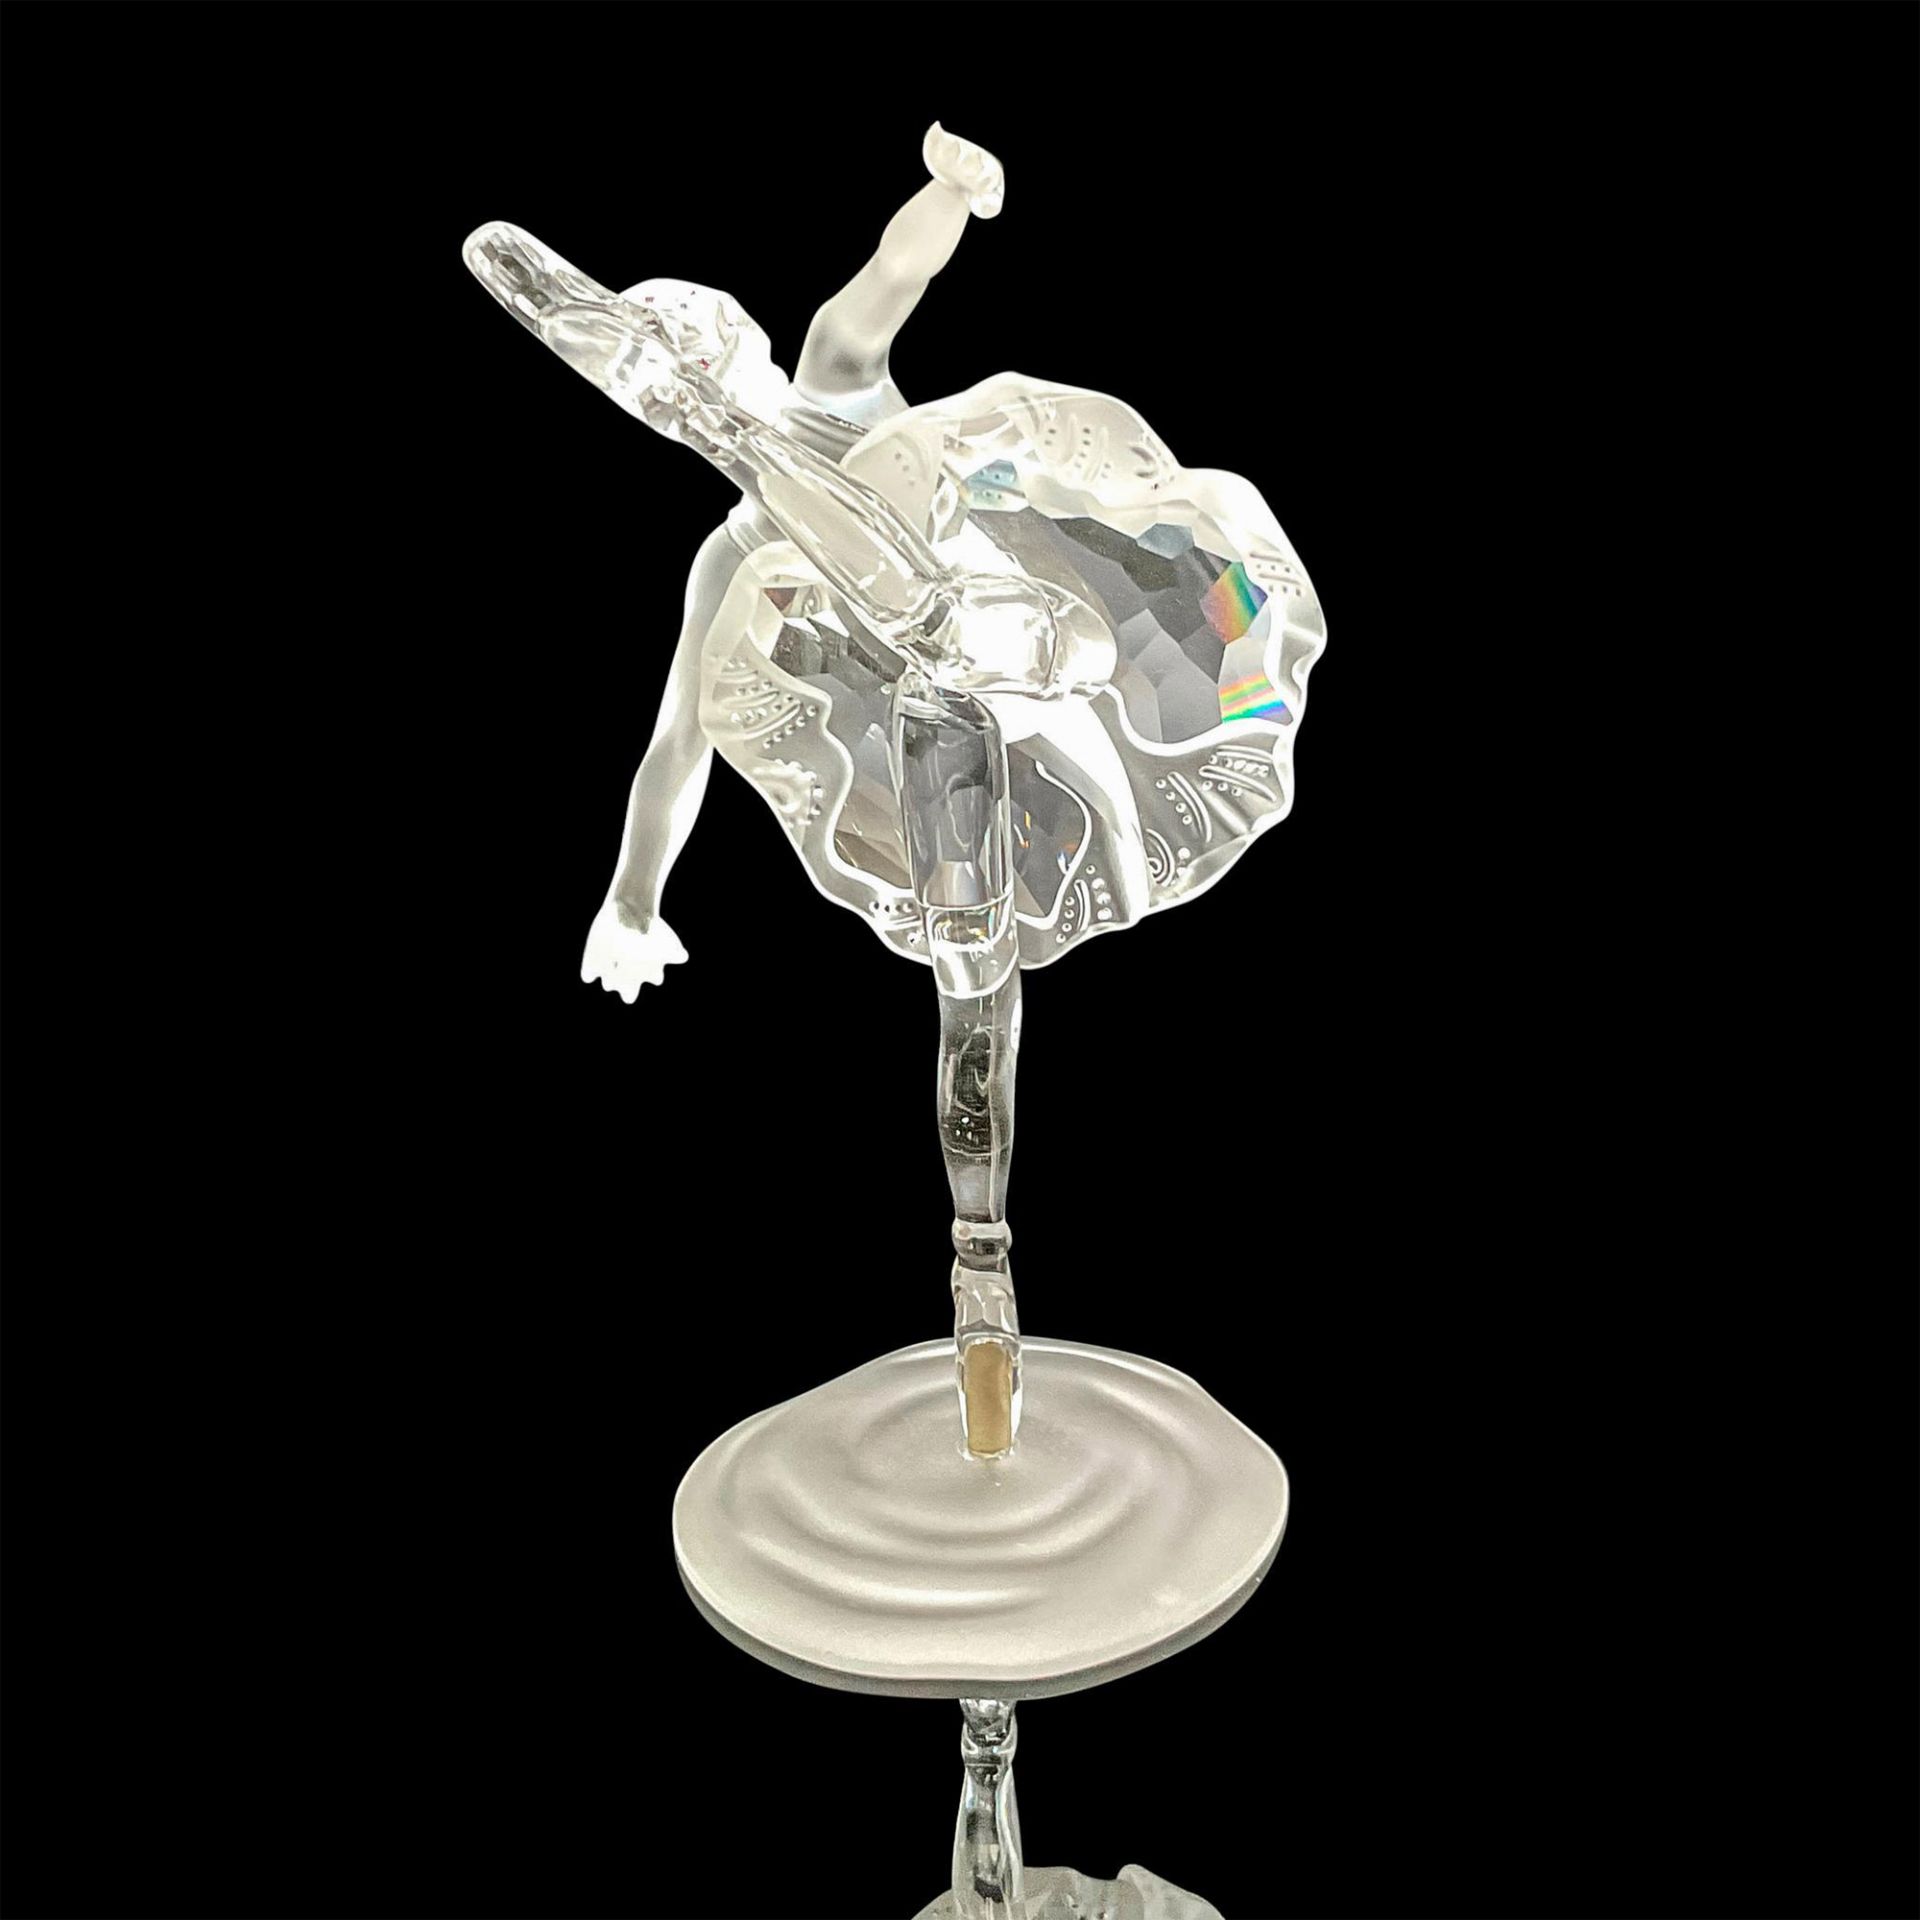 Swarovski Silver Crystal Figurine, Ballerina - Image 2 of 4